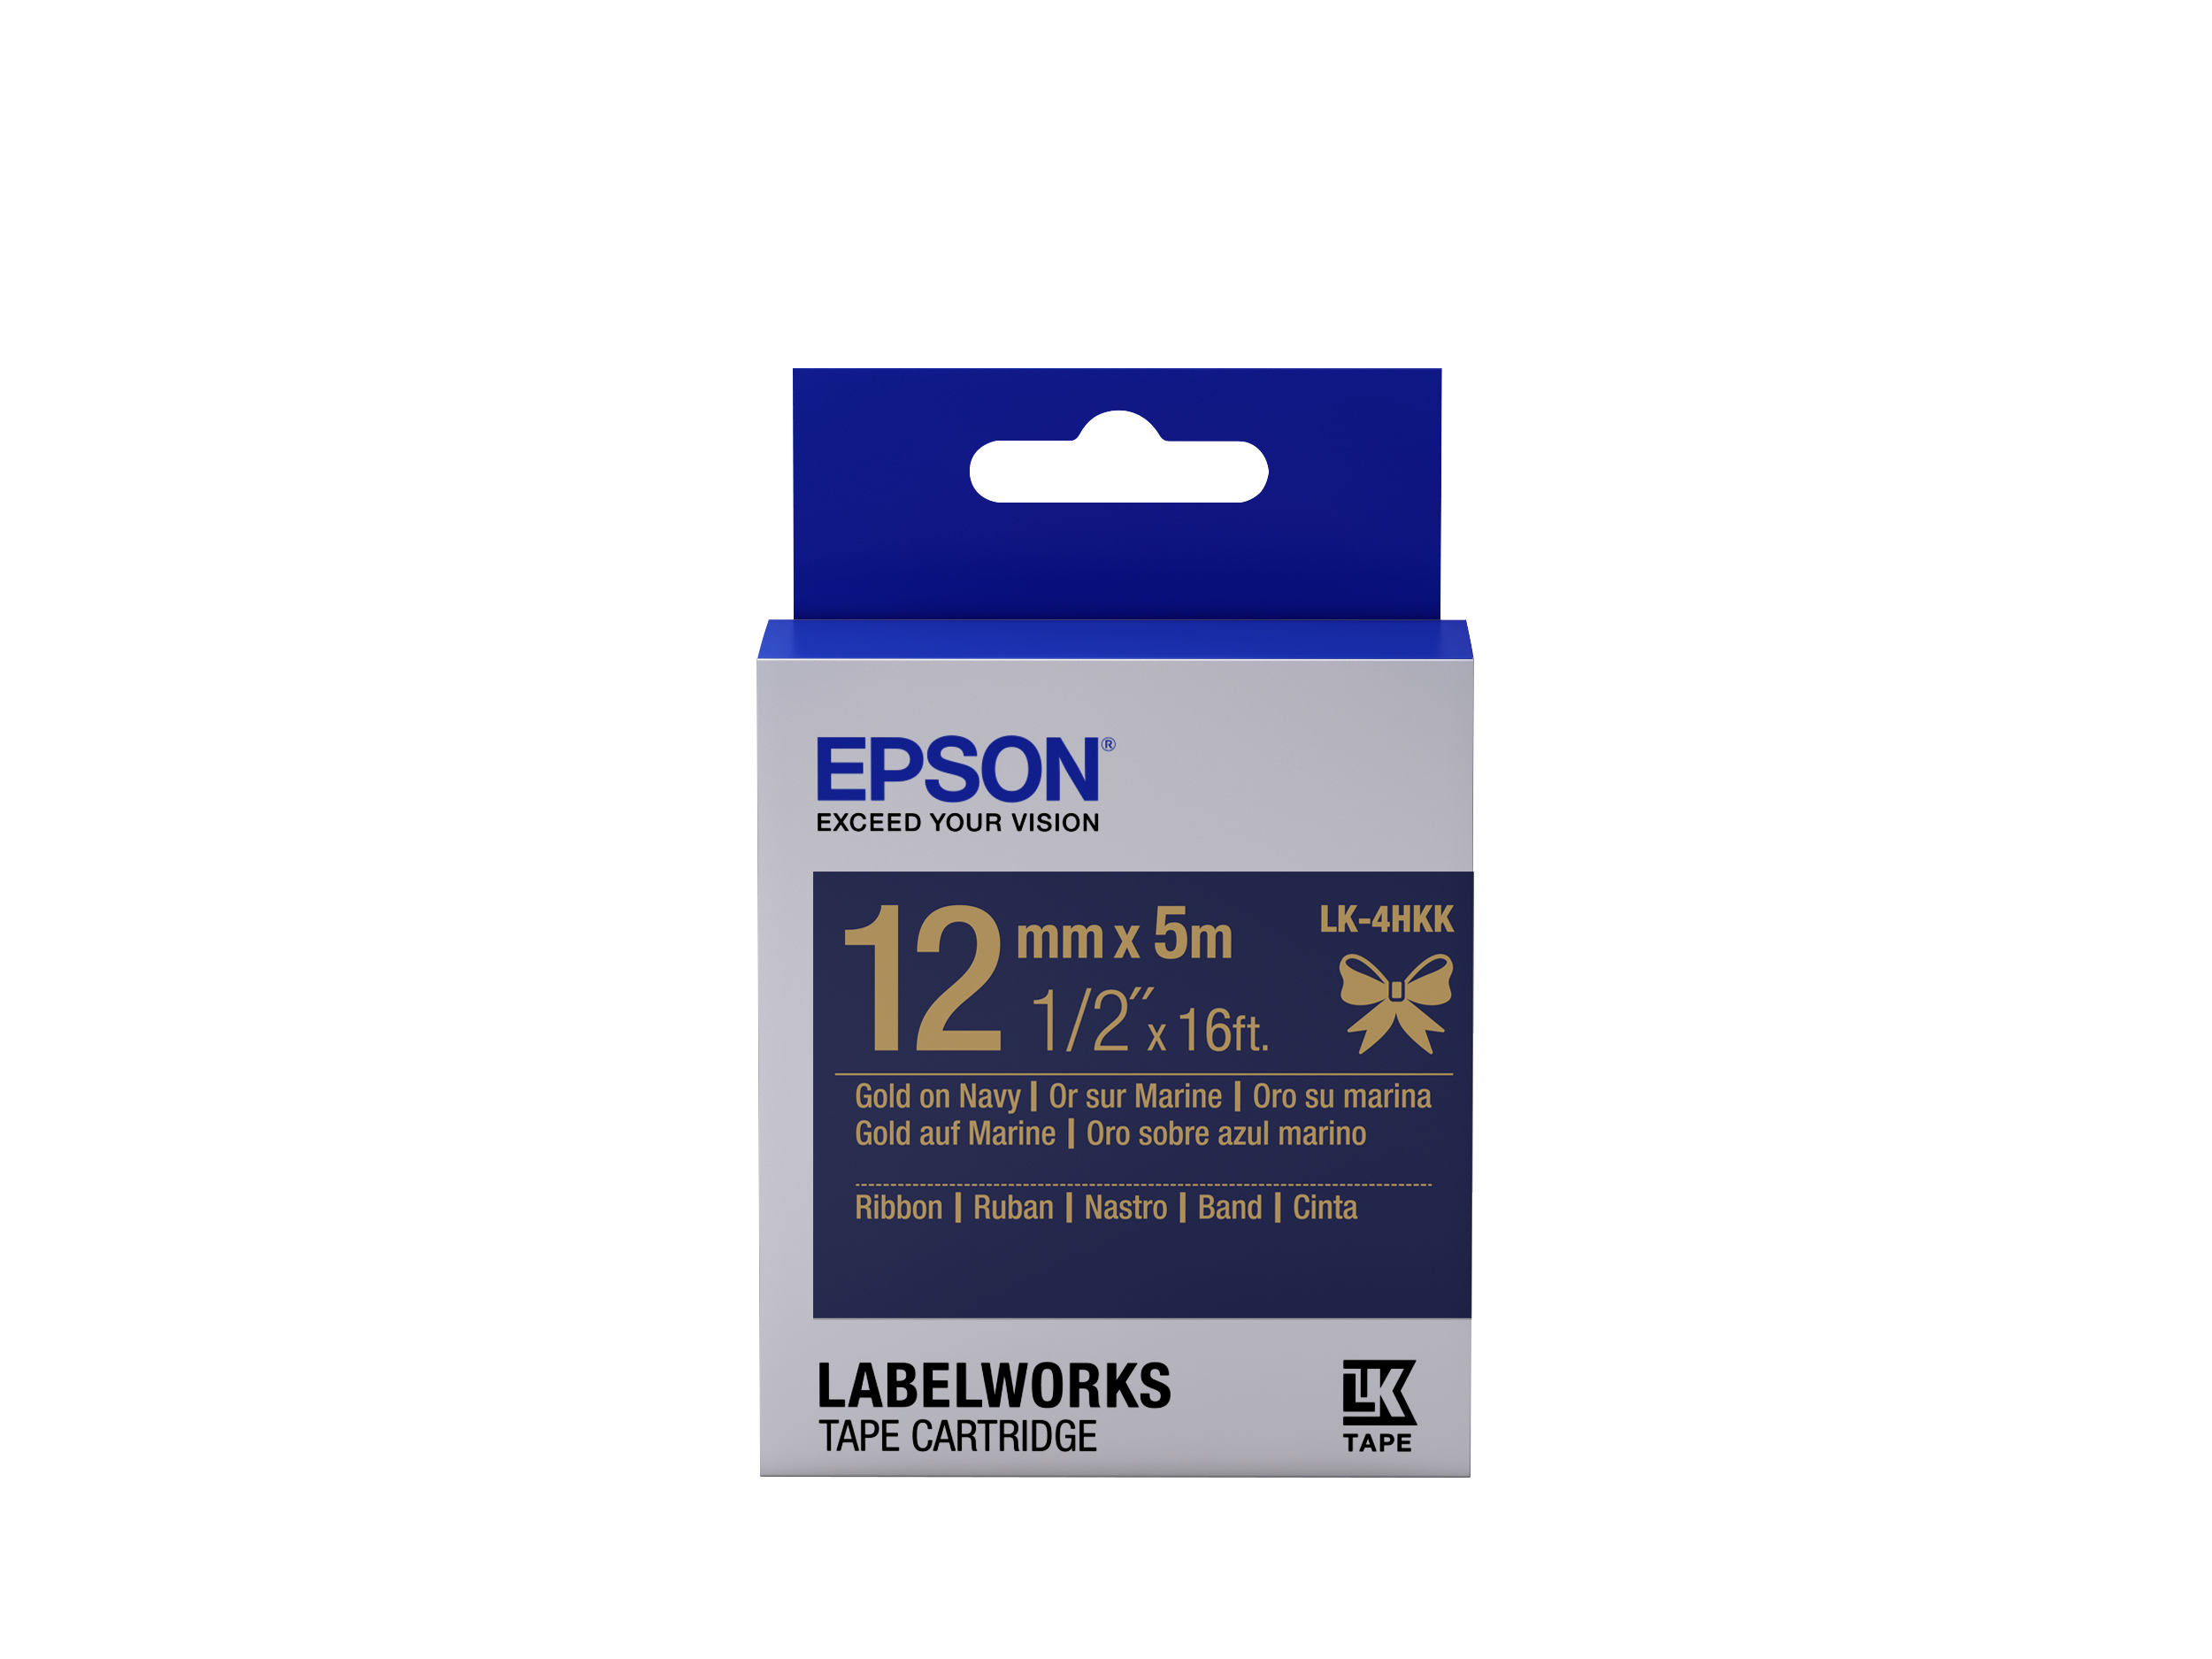 Epson etikettkassett Satinband LK-4HKK guld/marinblå 12 mm (5 m)